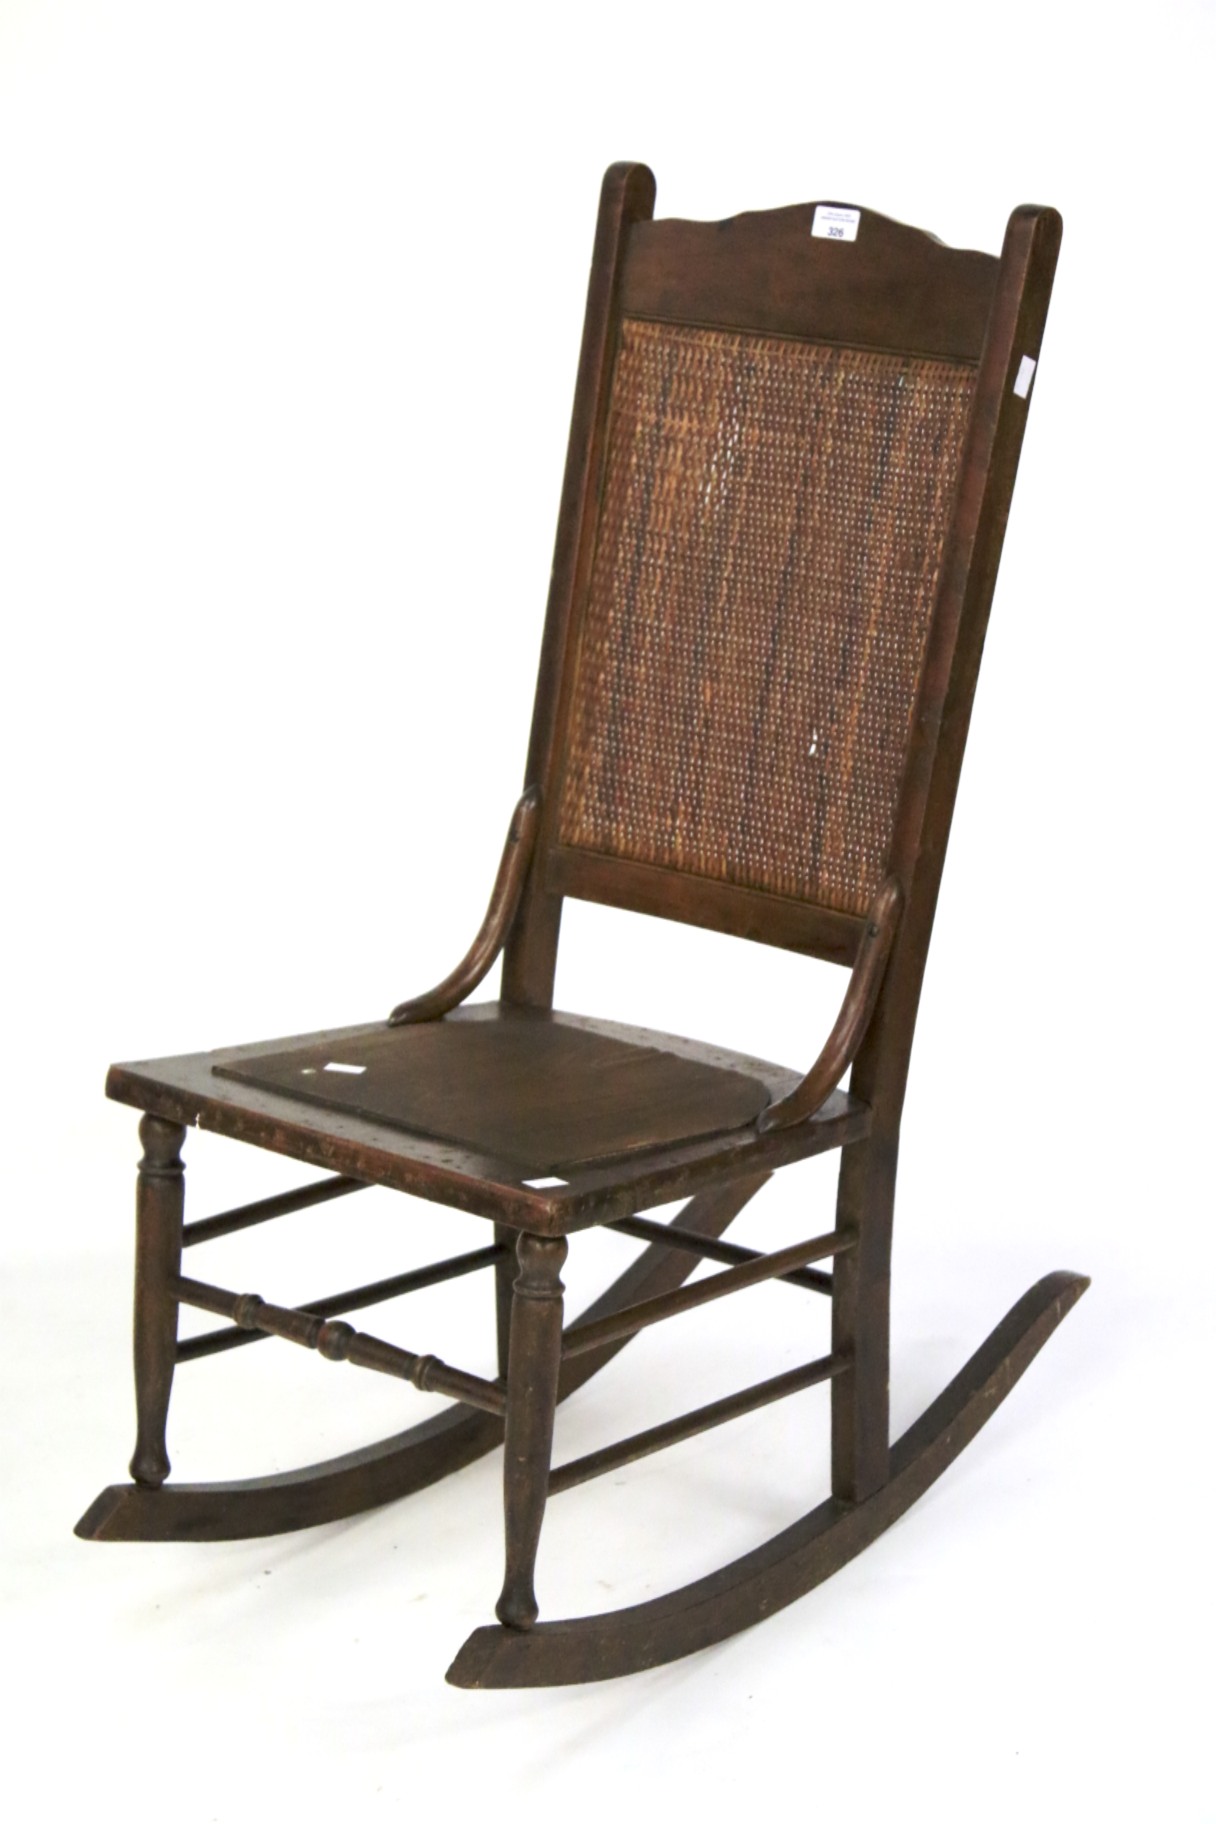 A 20th century mahogany rocking chair.